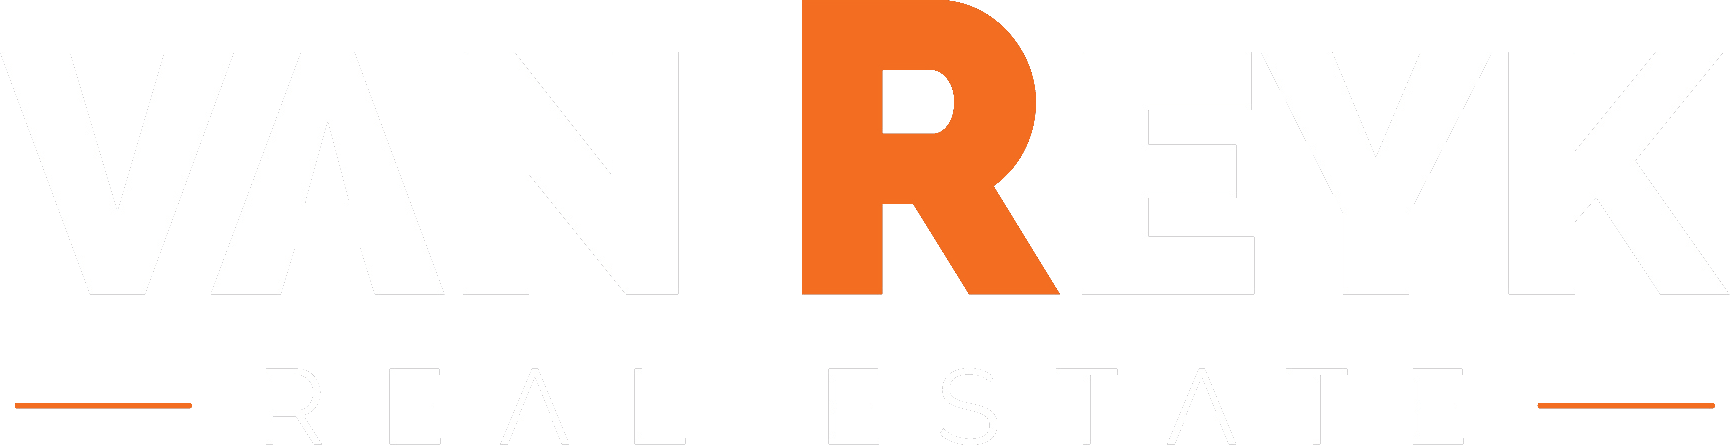 VAN REYK REAL ESTATE BAIRNSDALE - logo